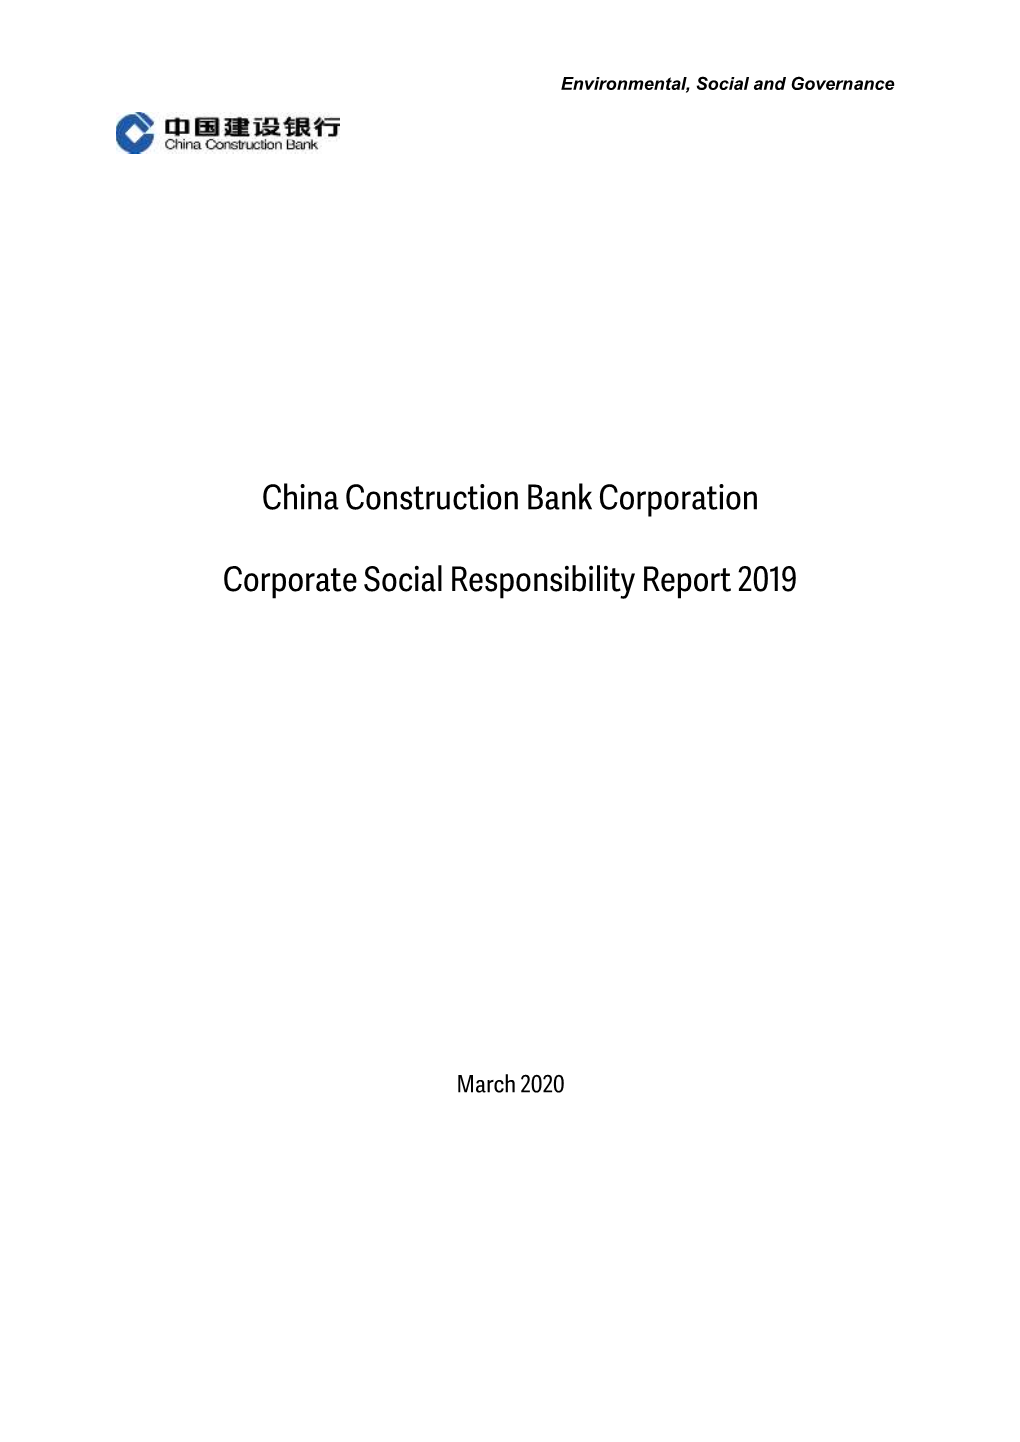 China Construction Bank Corporation Corporate Social Responsibility